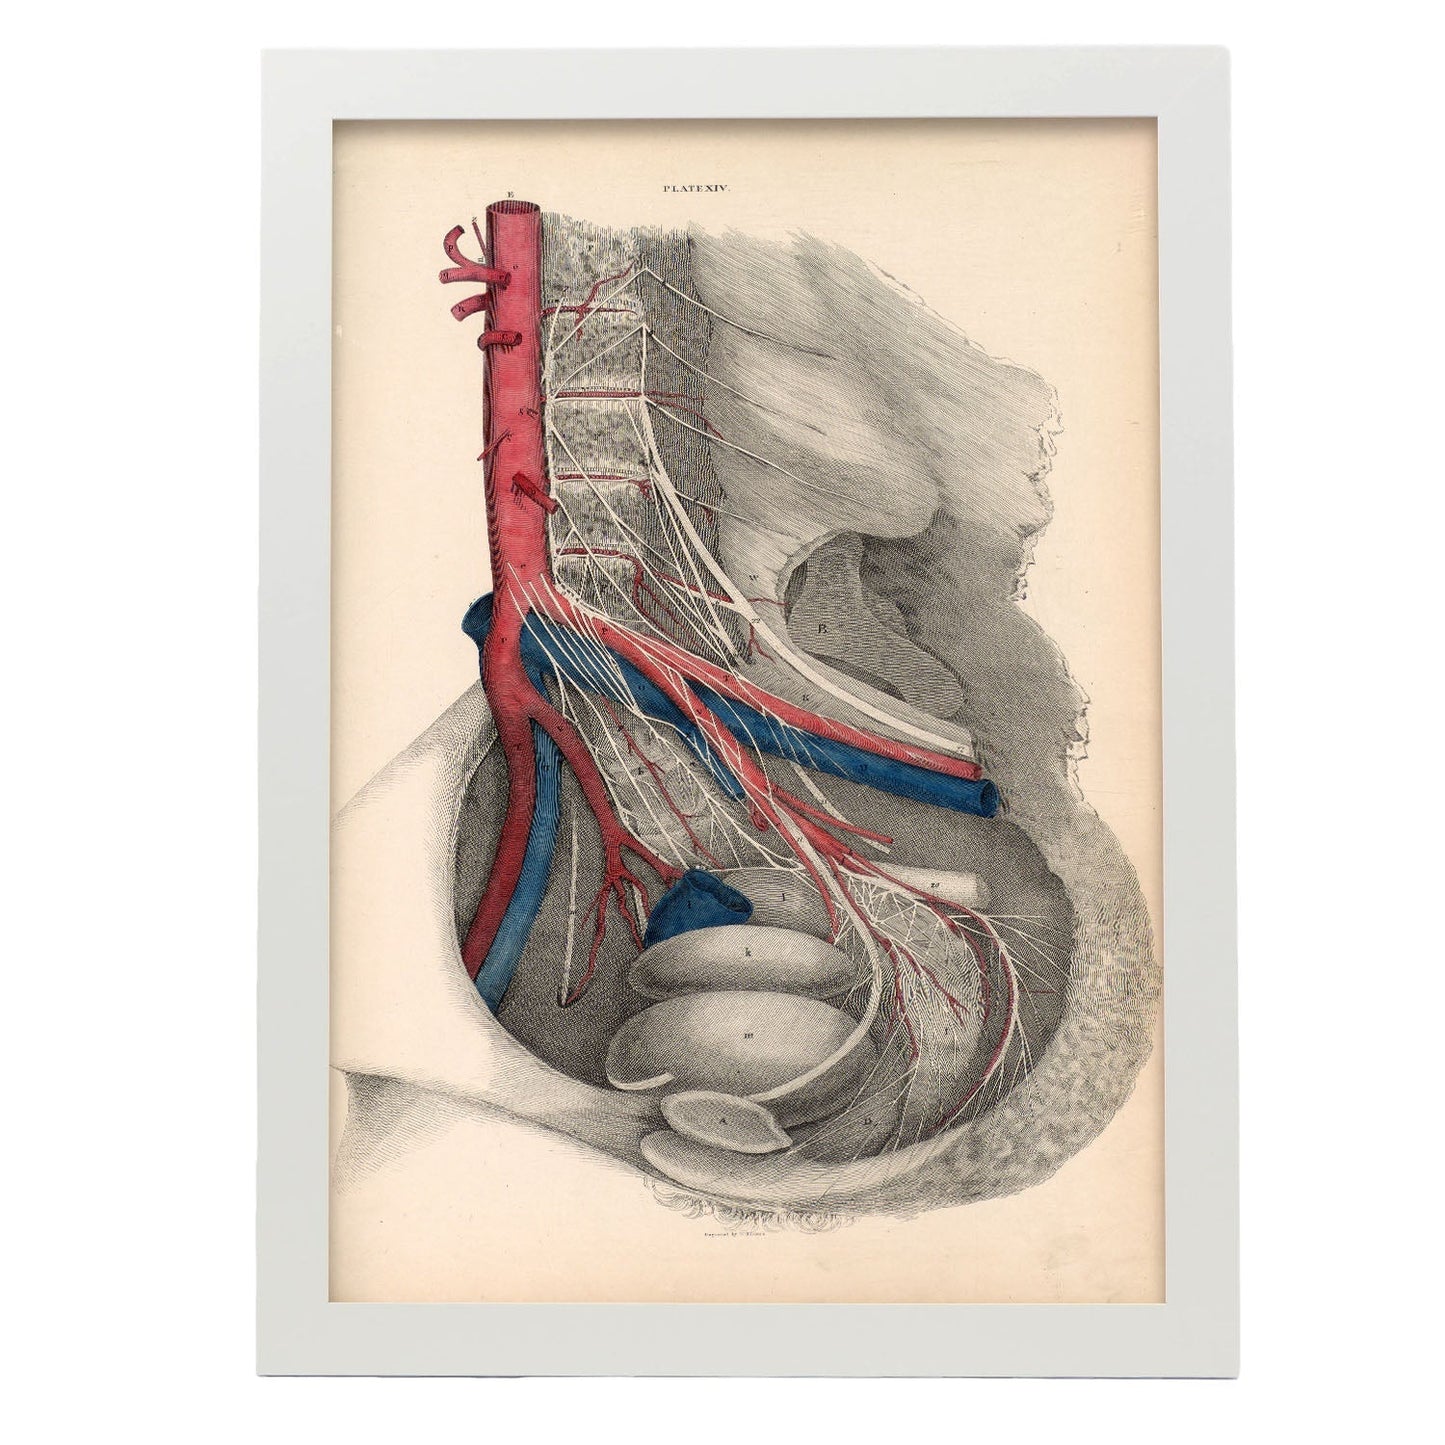 Dissection of the pelvis-Artwork-Nacnic-A3-Marco Blanco-Nacnic Estudio SL